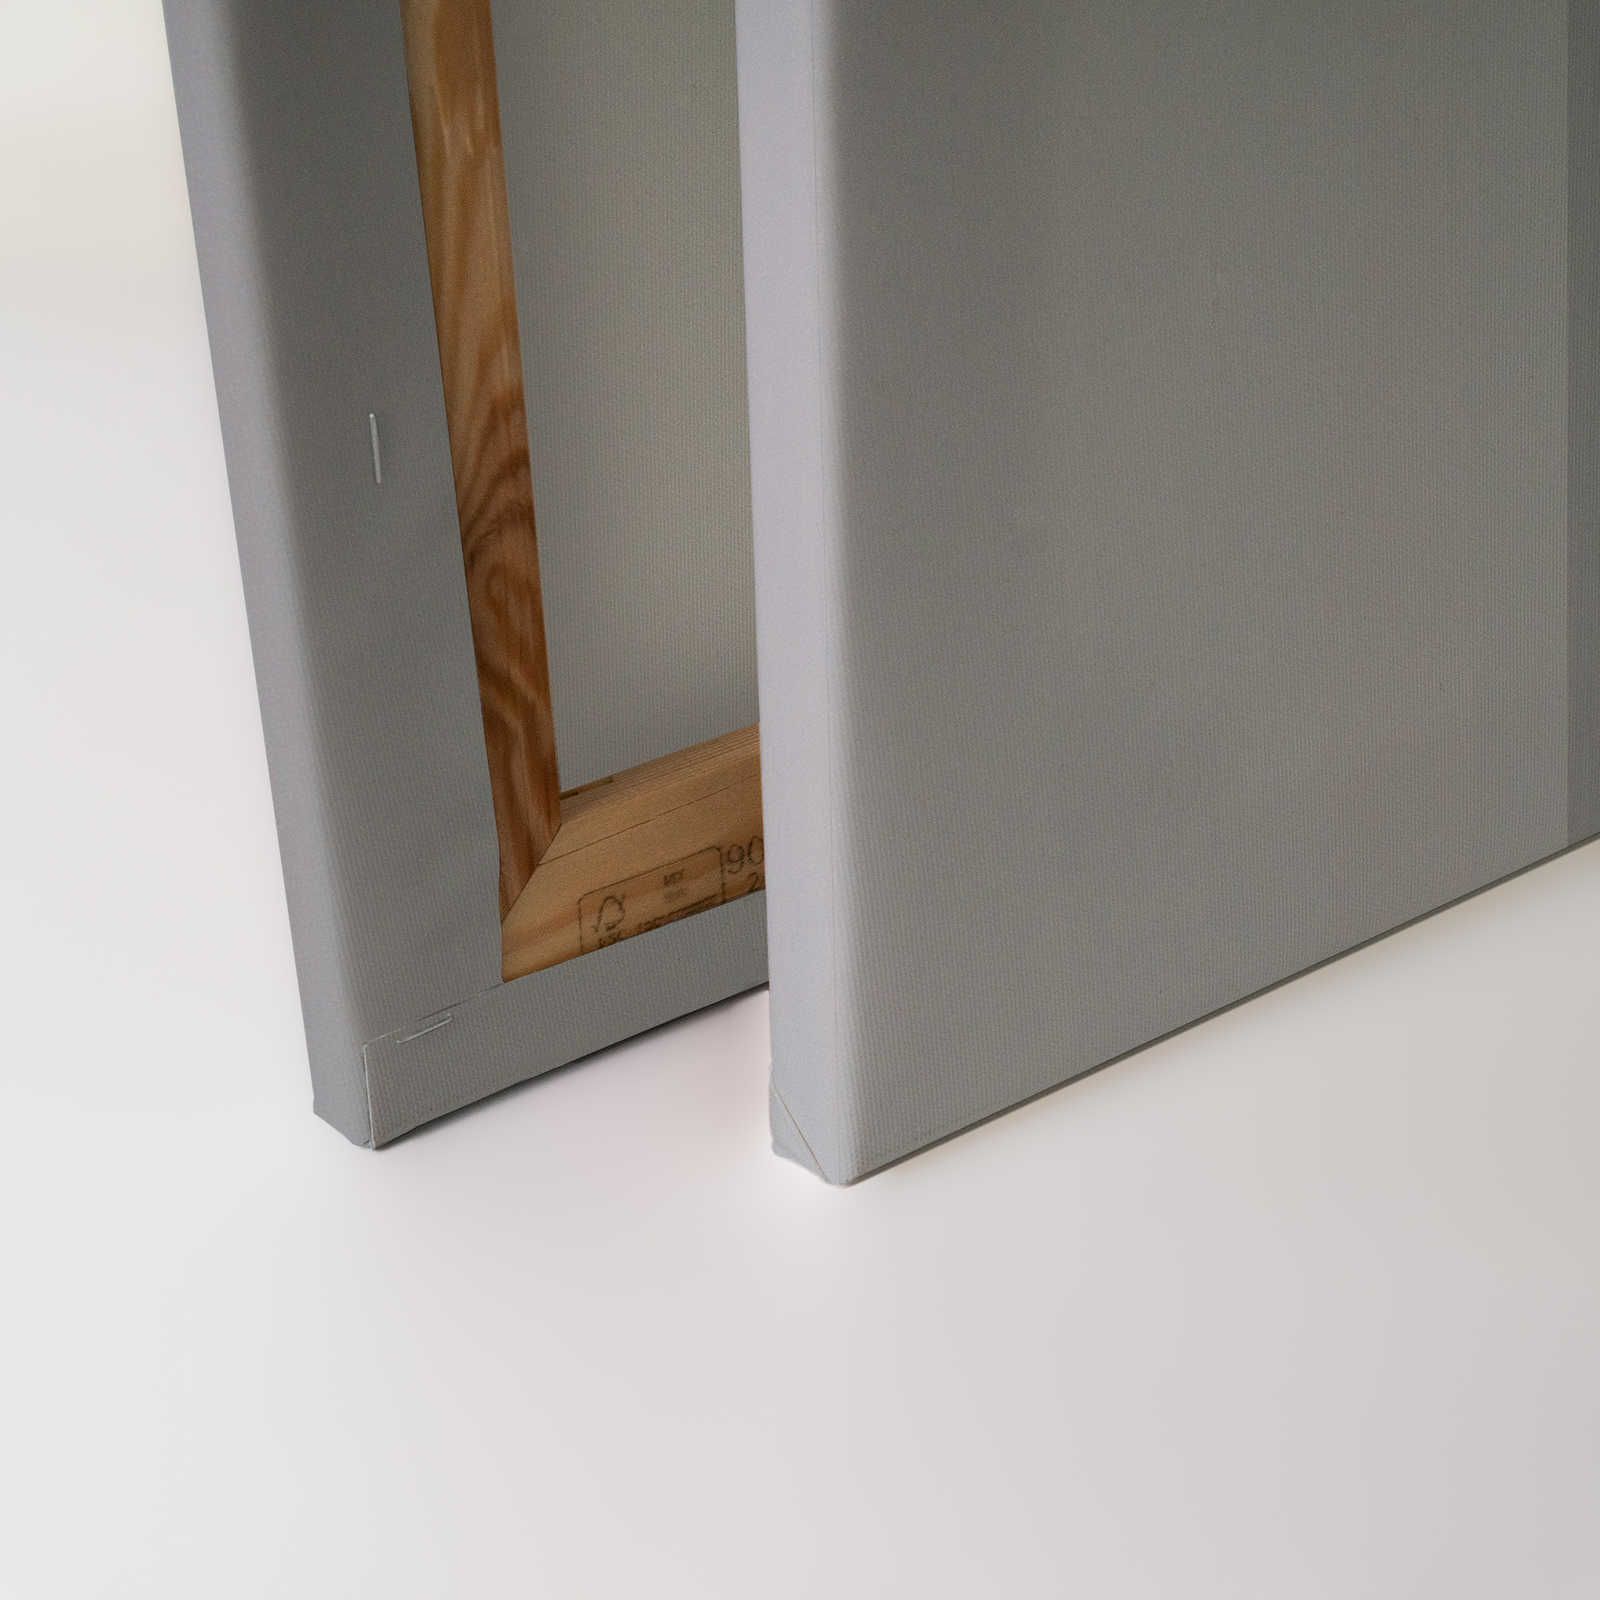             Behind the Wall 1 - Tela 3D in acciaio grigio con design minimalista - 0,90 m x 0,60 m
        